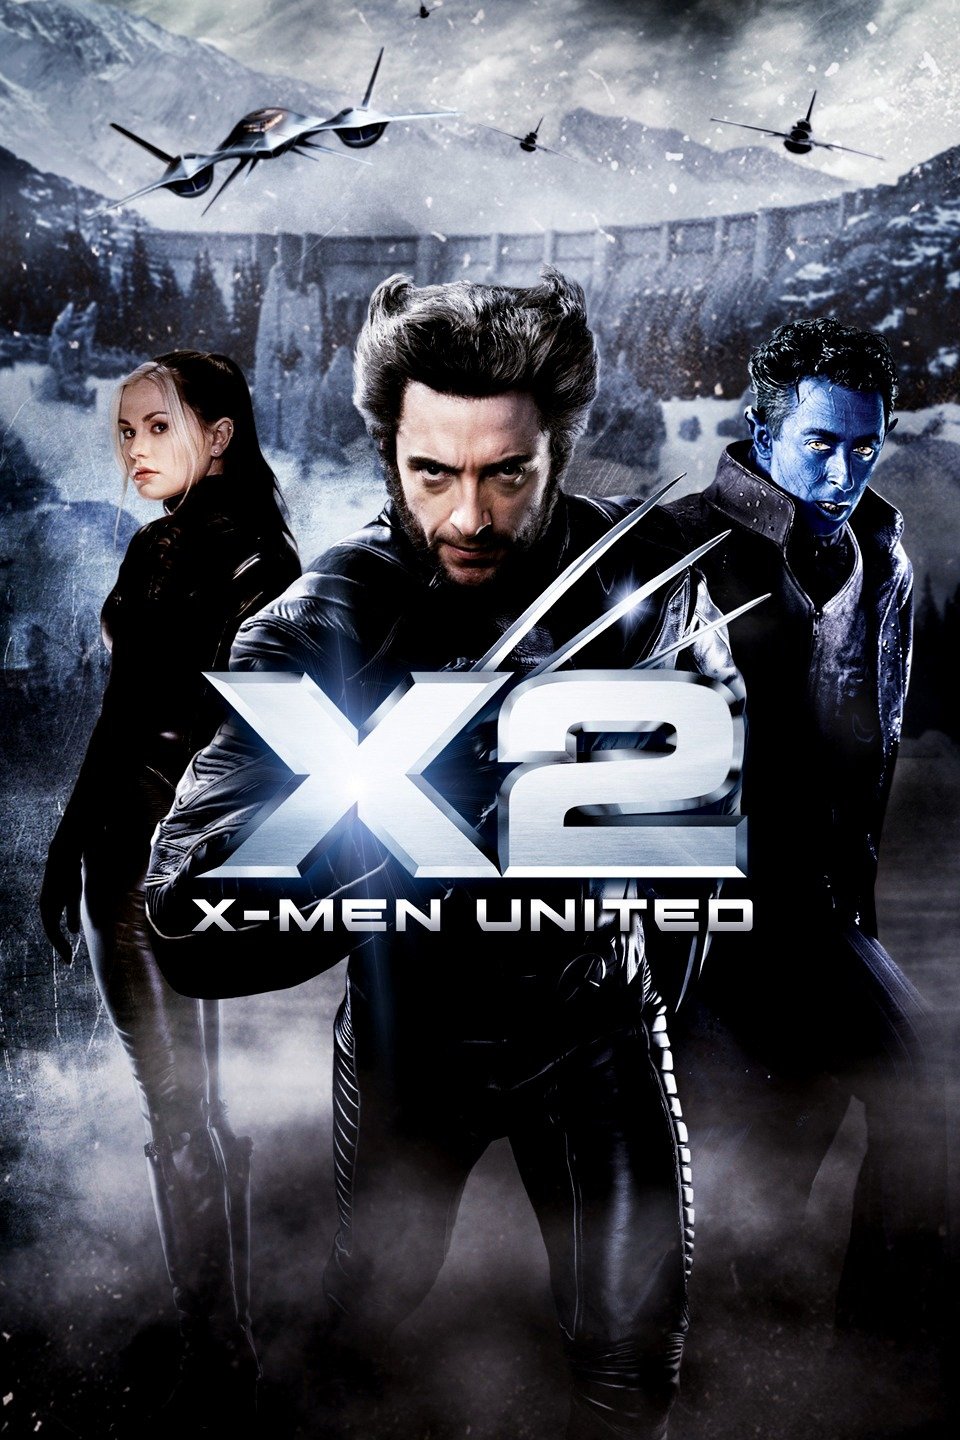 [MINI Super-HQ] X2: X-Men United (2003) เอ็กซ์ เม็น ศึกมนุษย์พลังเหนือโลก ภาค 2 [1080P] [พากย์ไทย 5.1 + อังกฤษ DTS] [บรรยายไทย + อังกฤษ] [เสียงไทย + ซับไทย] [ONE2UP]